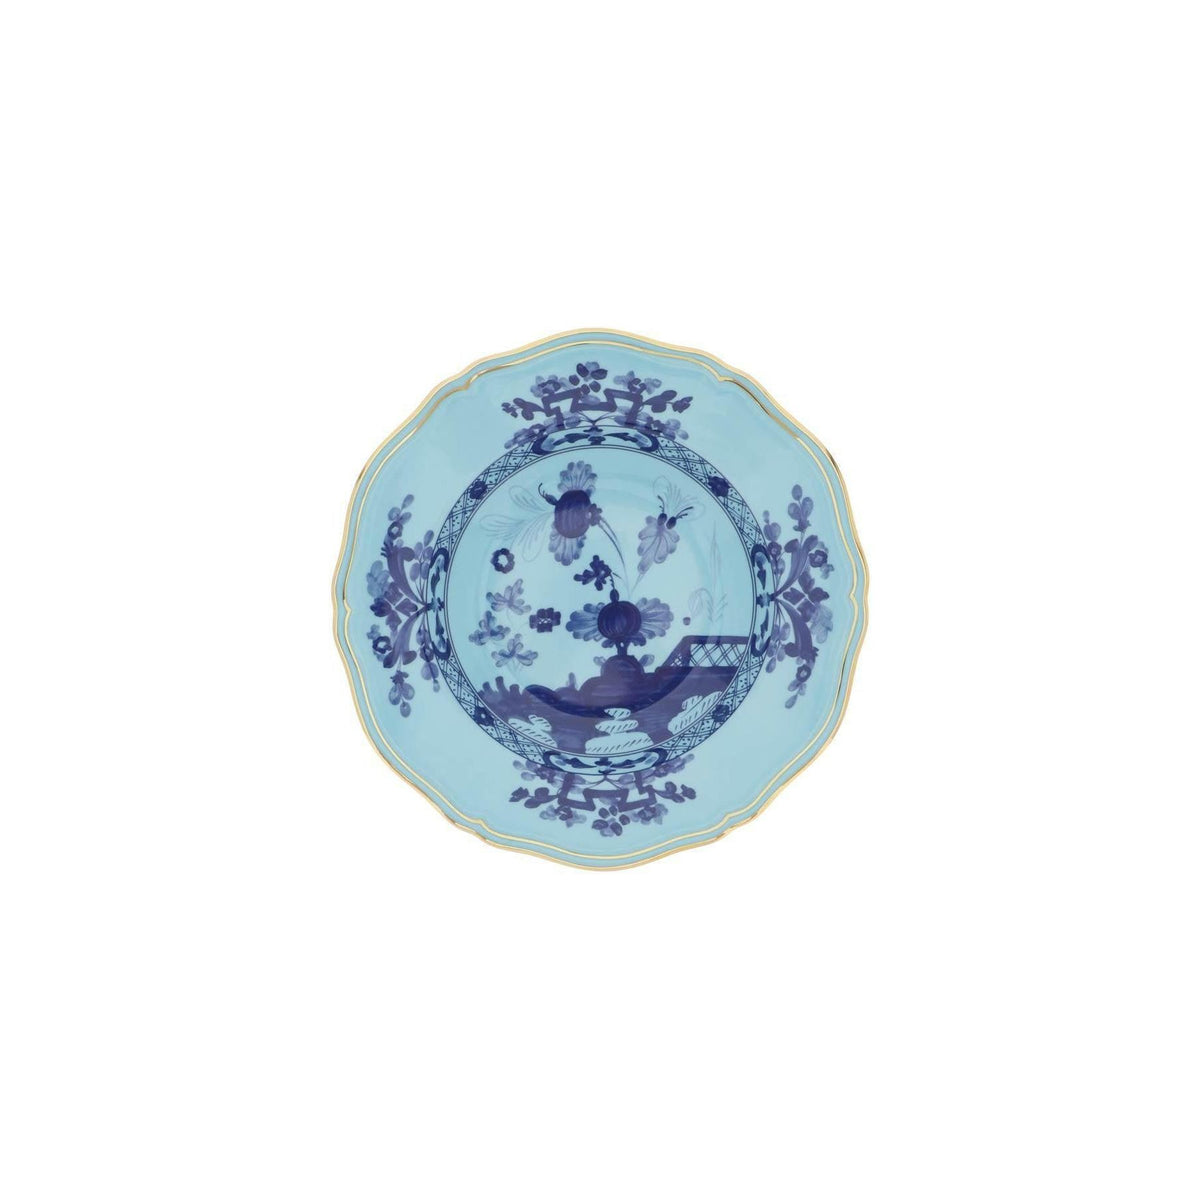 GINORI 1735 - Oriente Italiano Soup Plate - JOHN JULIA